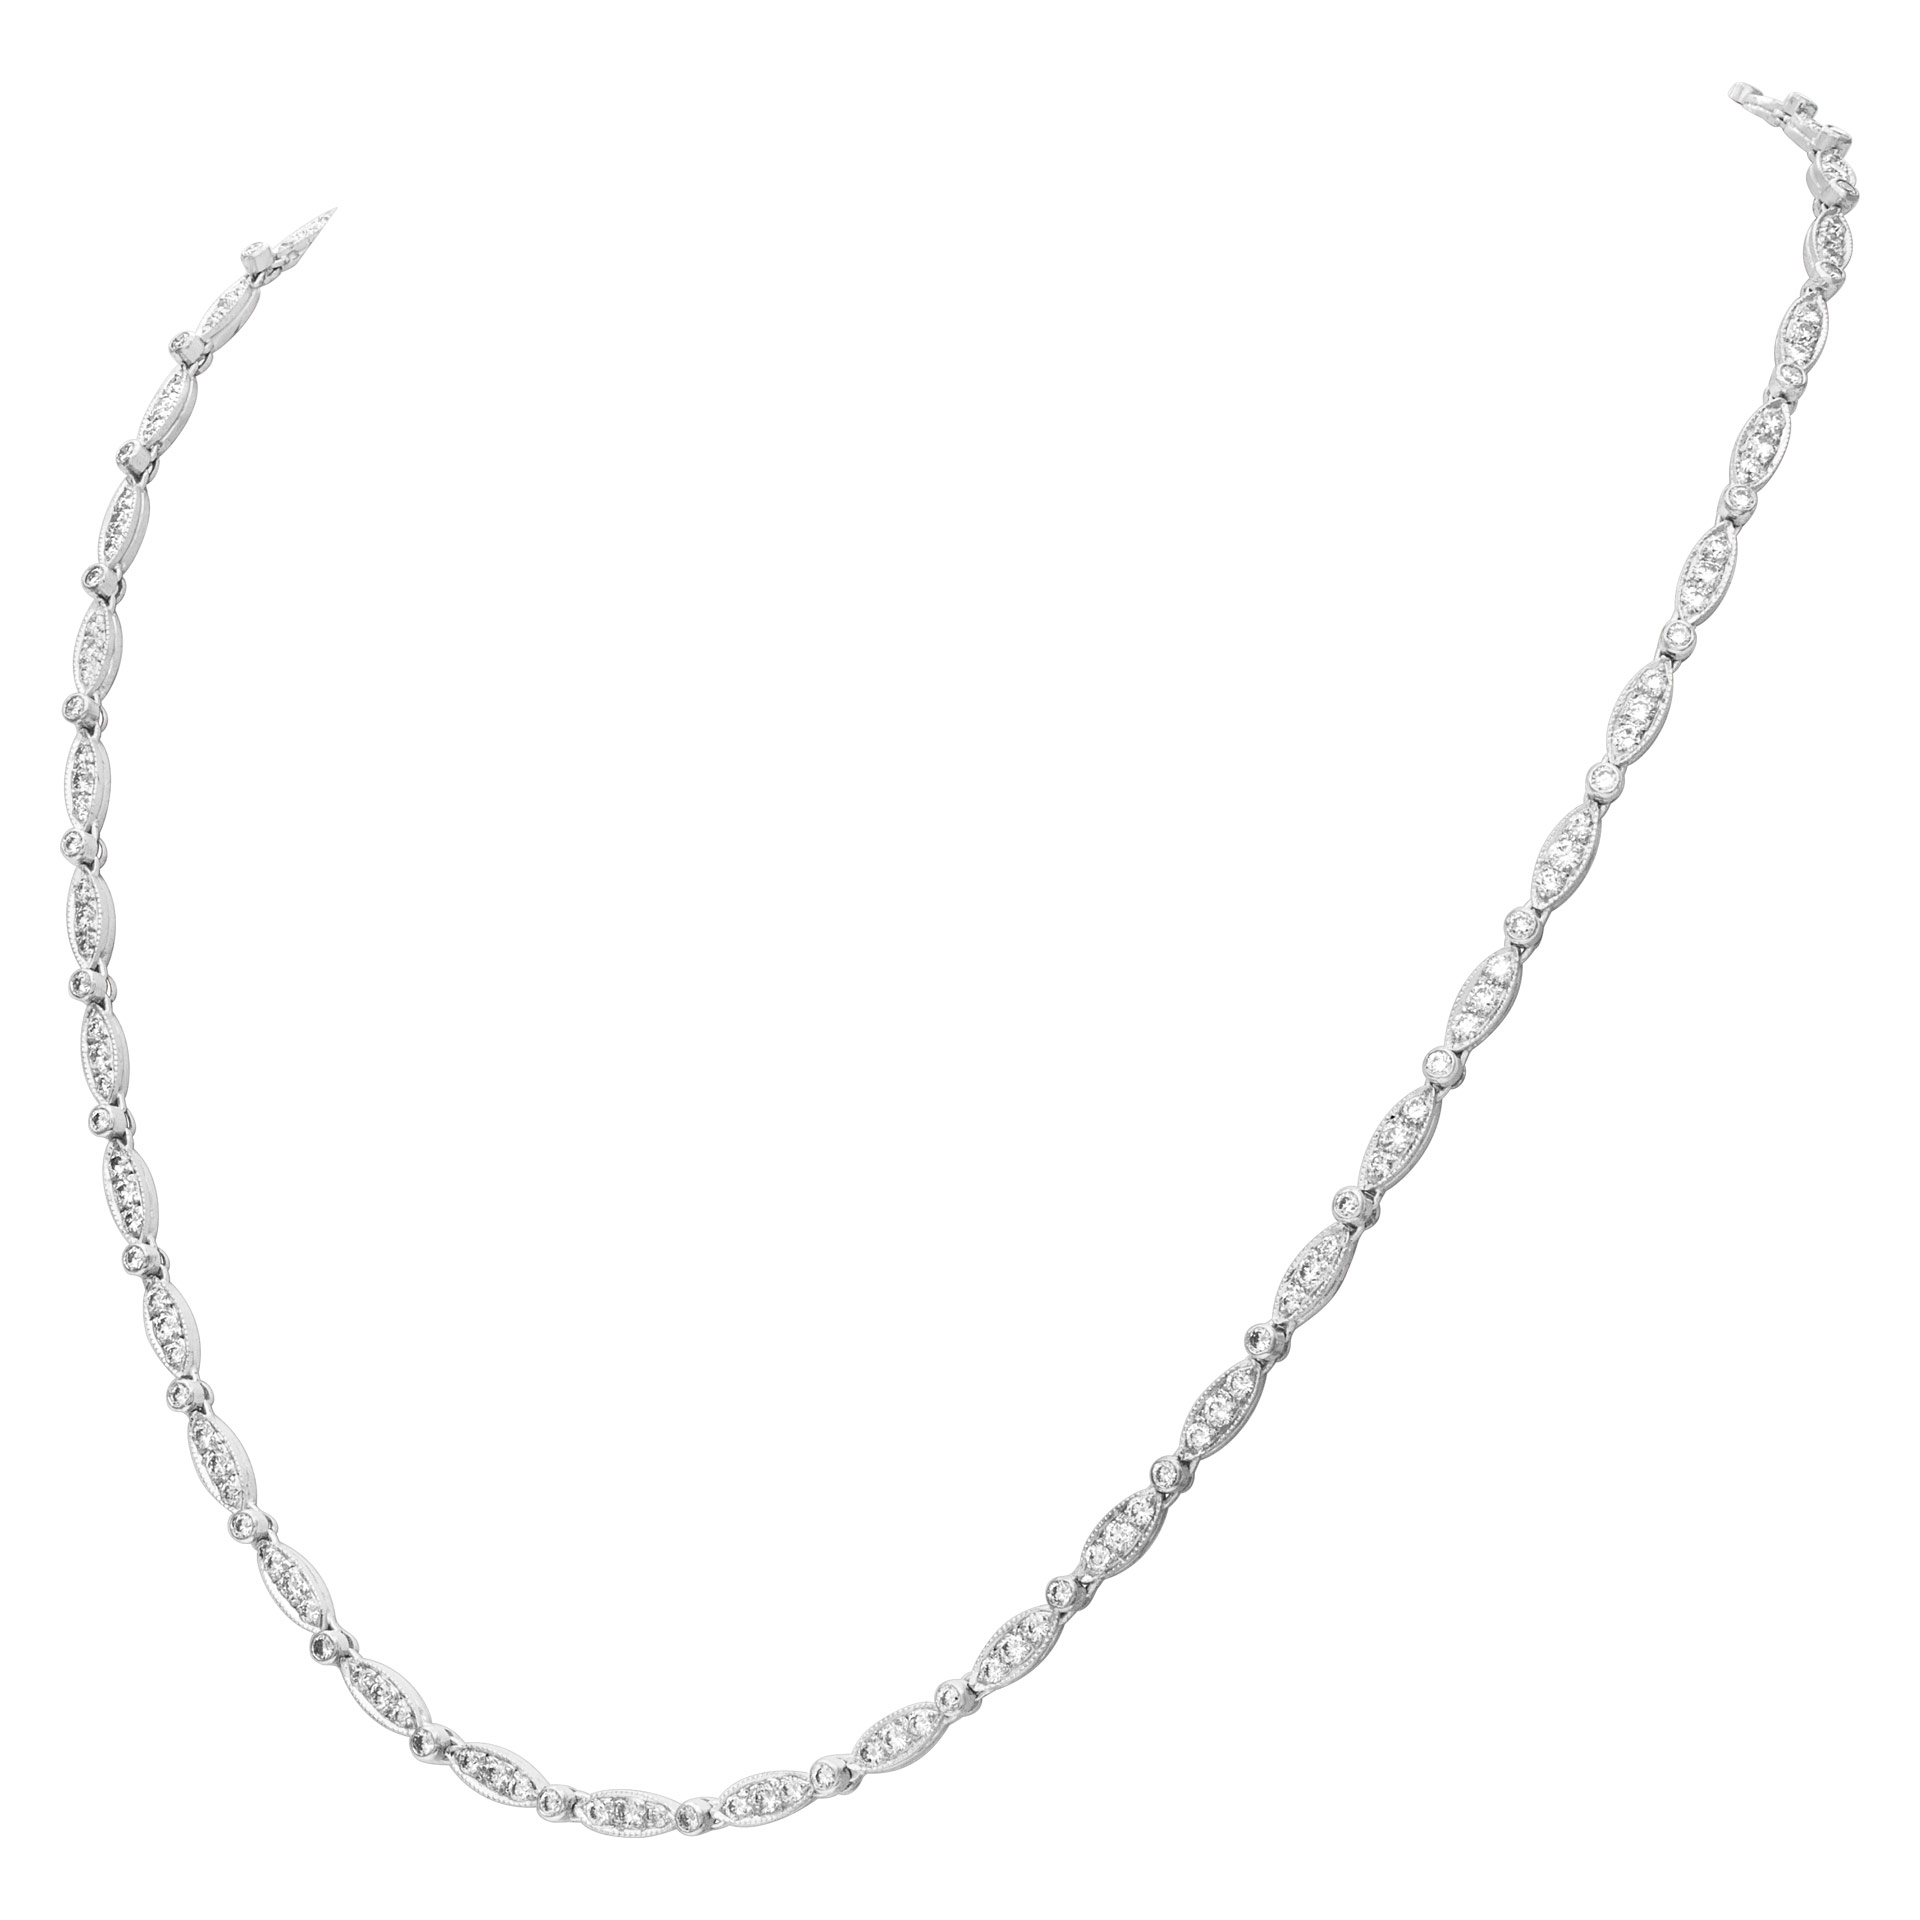 Diamond necklace in 18k white gold,  over 2 carats round brilliant cut diamonds image 3